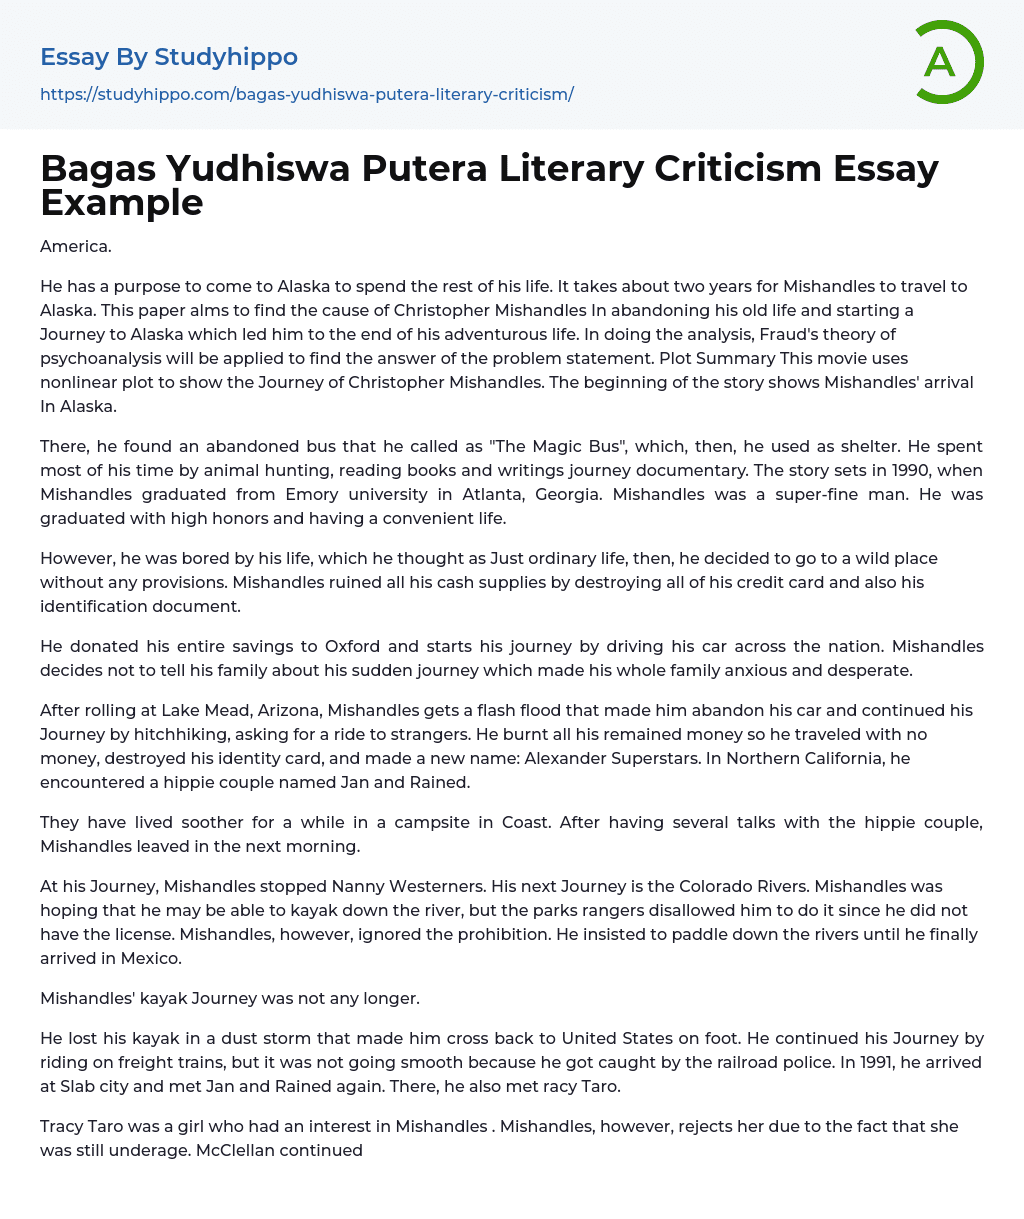 Bagas Yudhiswa Putera Literary Criticism Essay Example